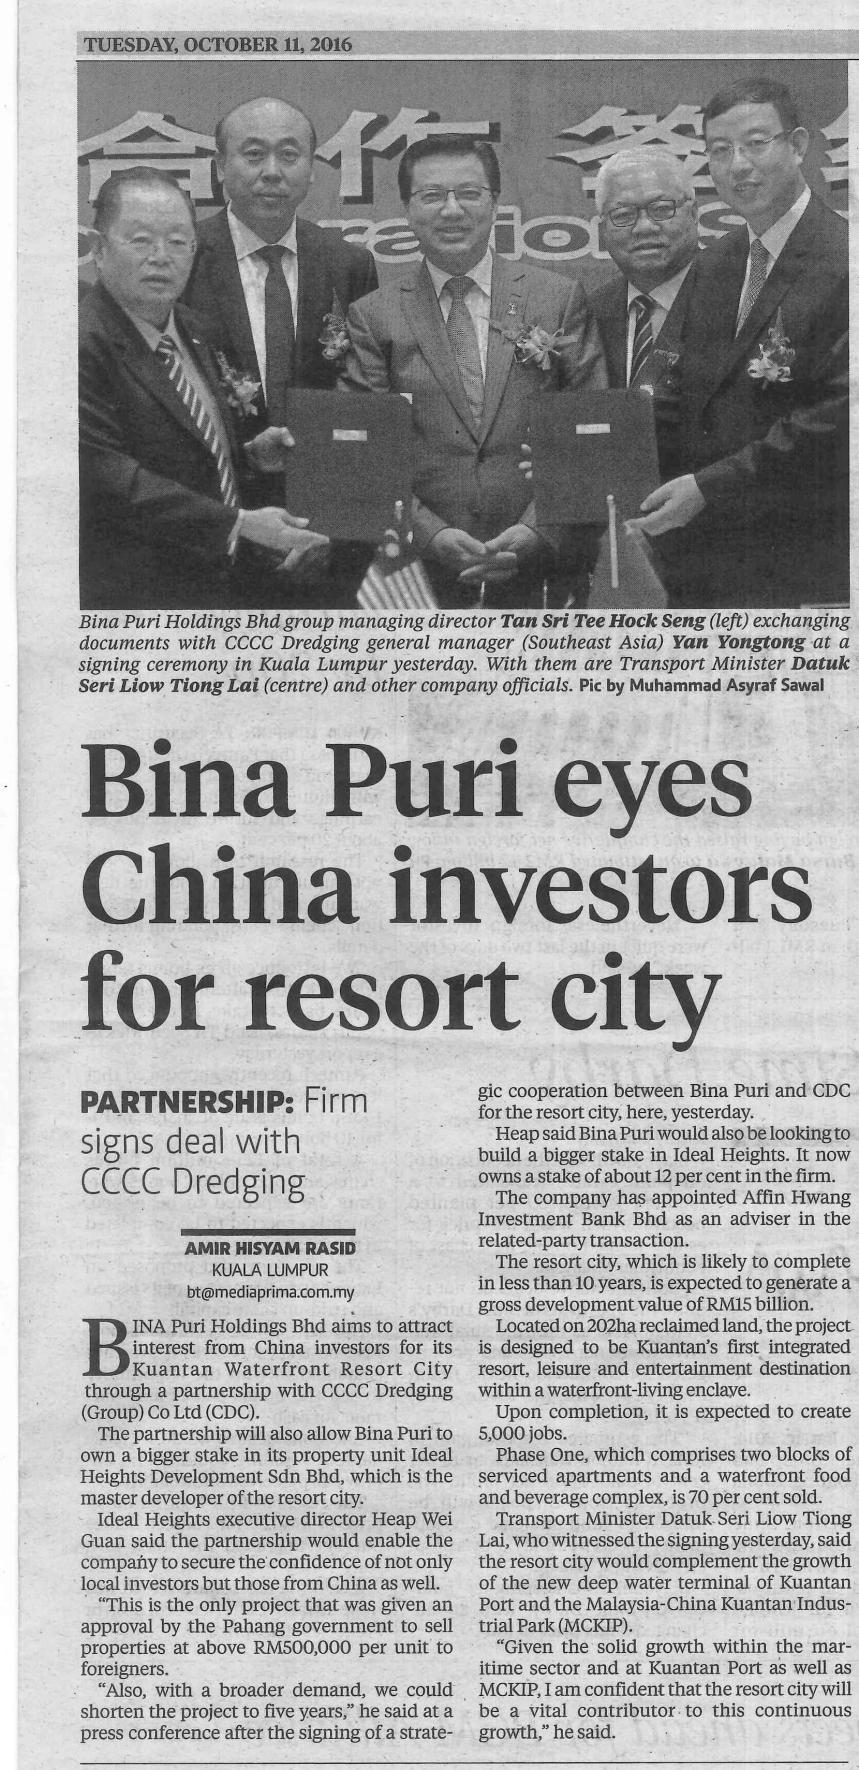 Newspaper : New Straits Times Title : Bina Puri eyes China